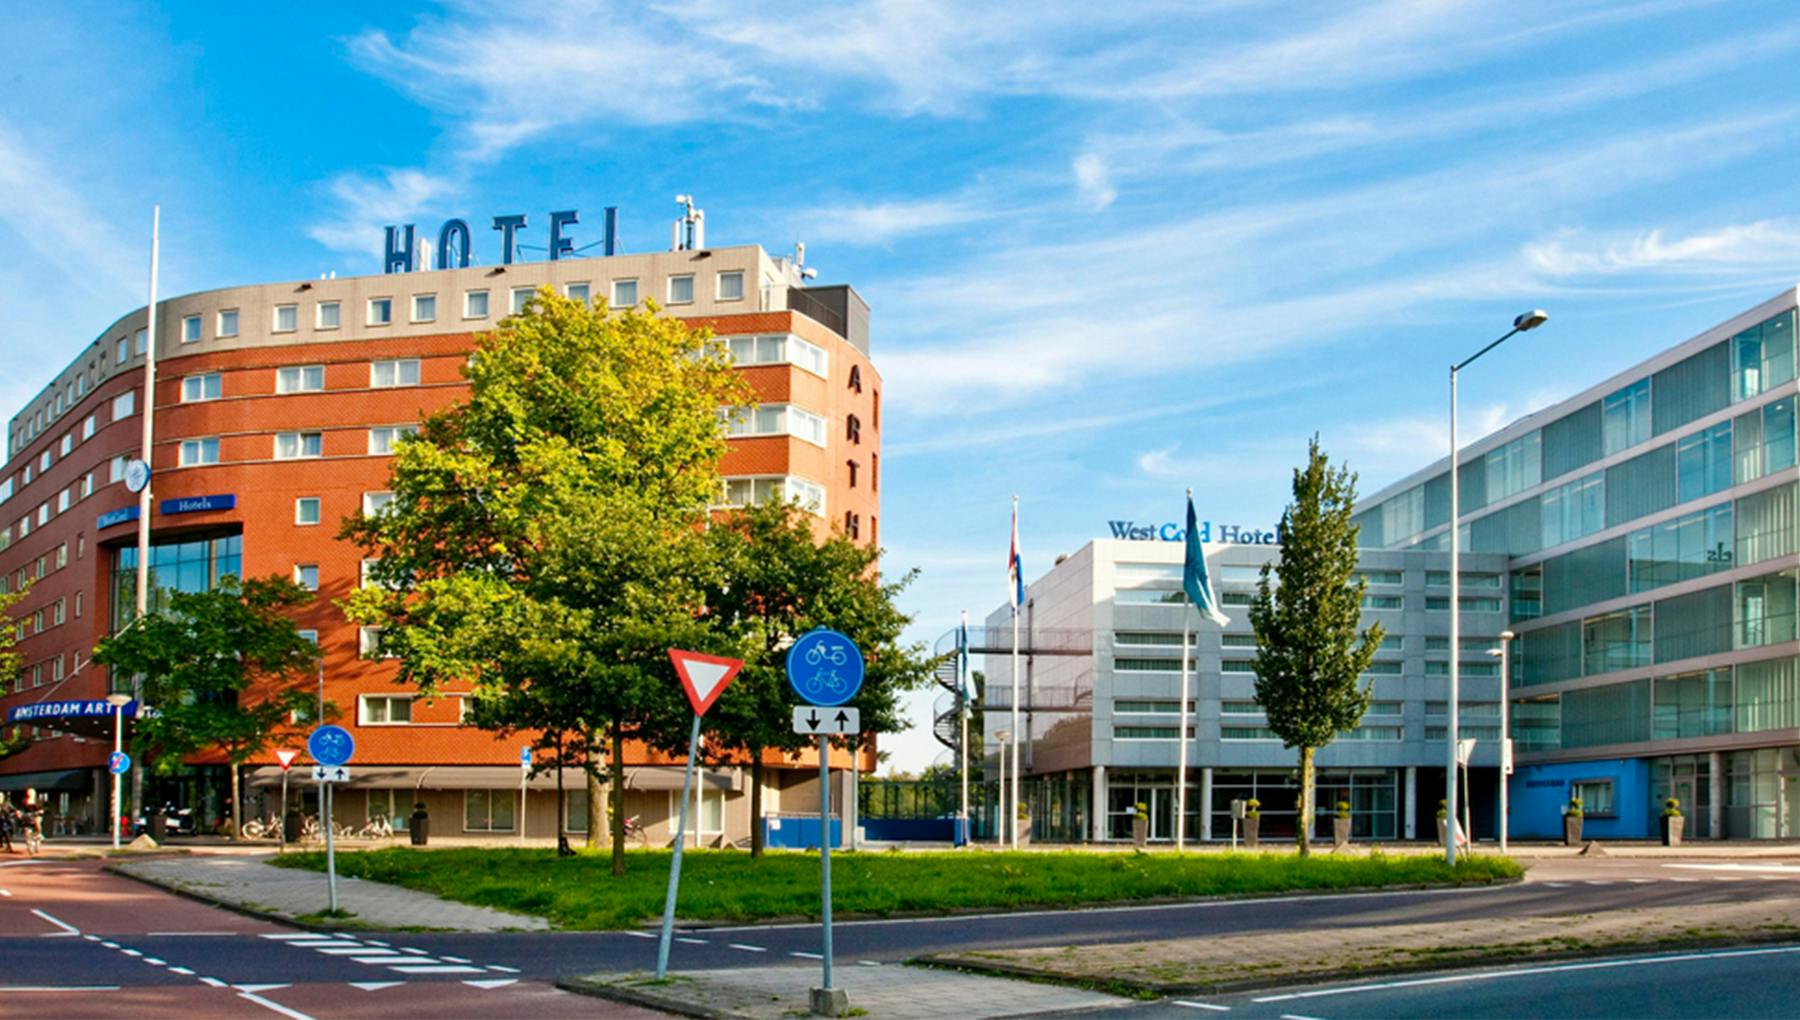 WestCord Art Hotel Amsterdam – 3 Stars